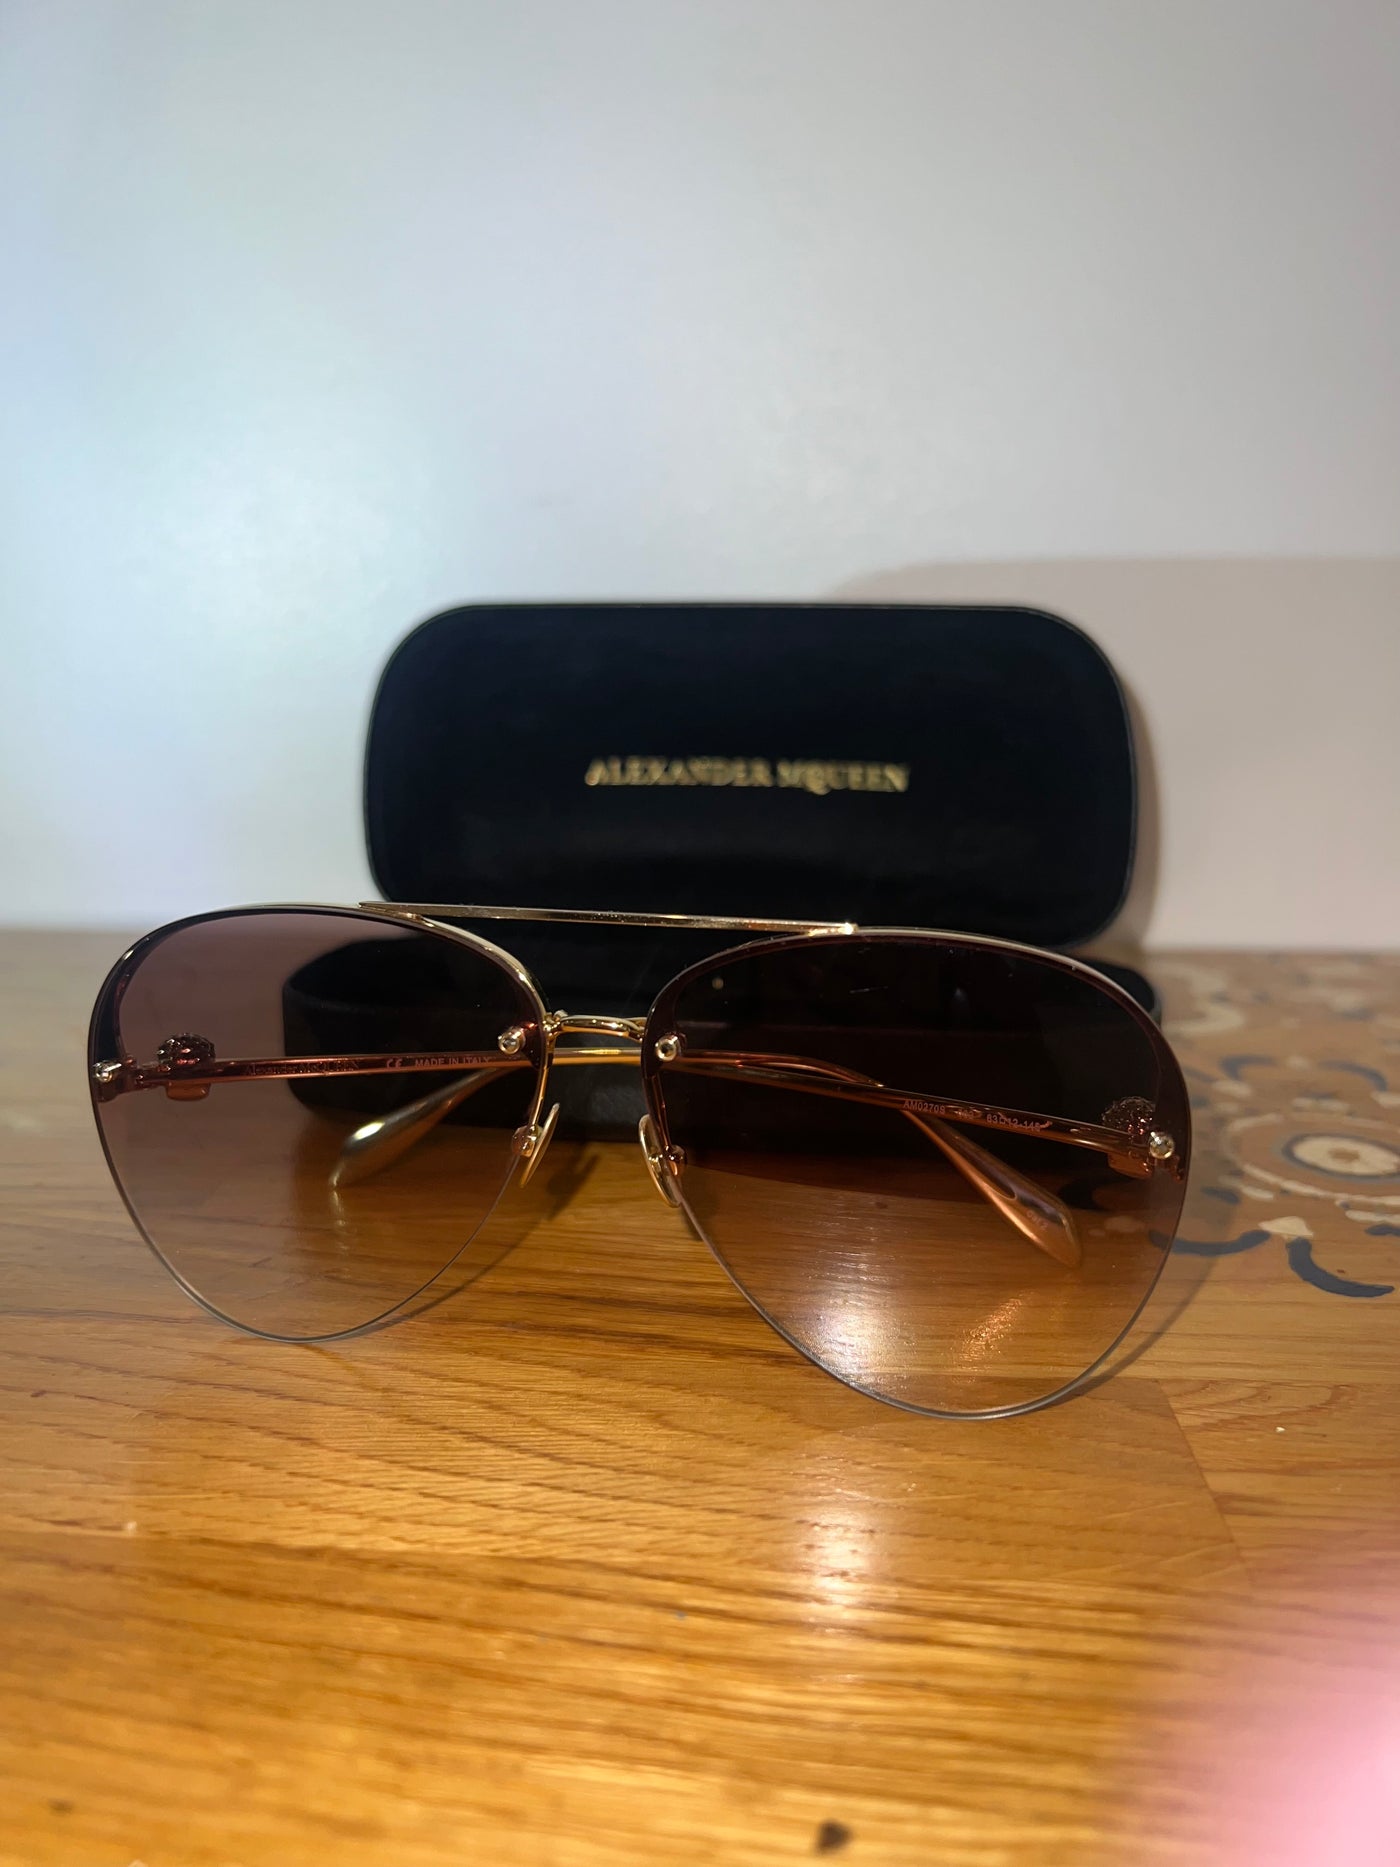 Alexander McQueen skull aviator pink sunglasses